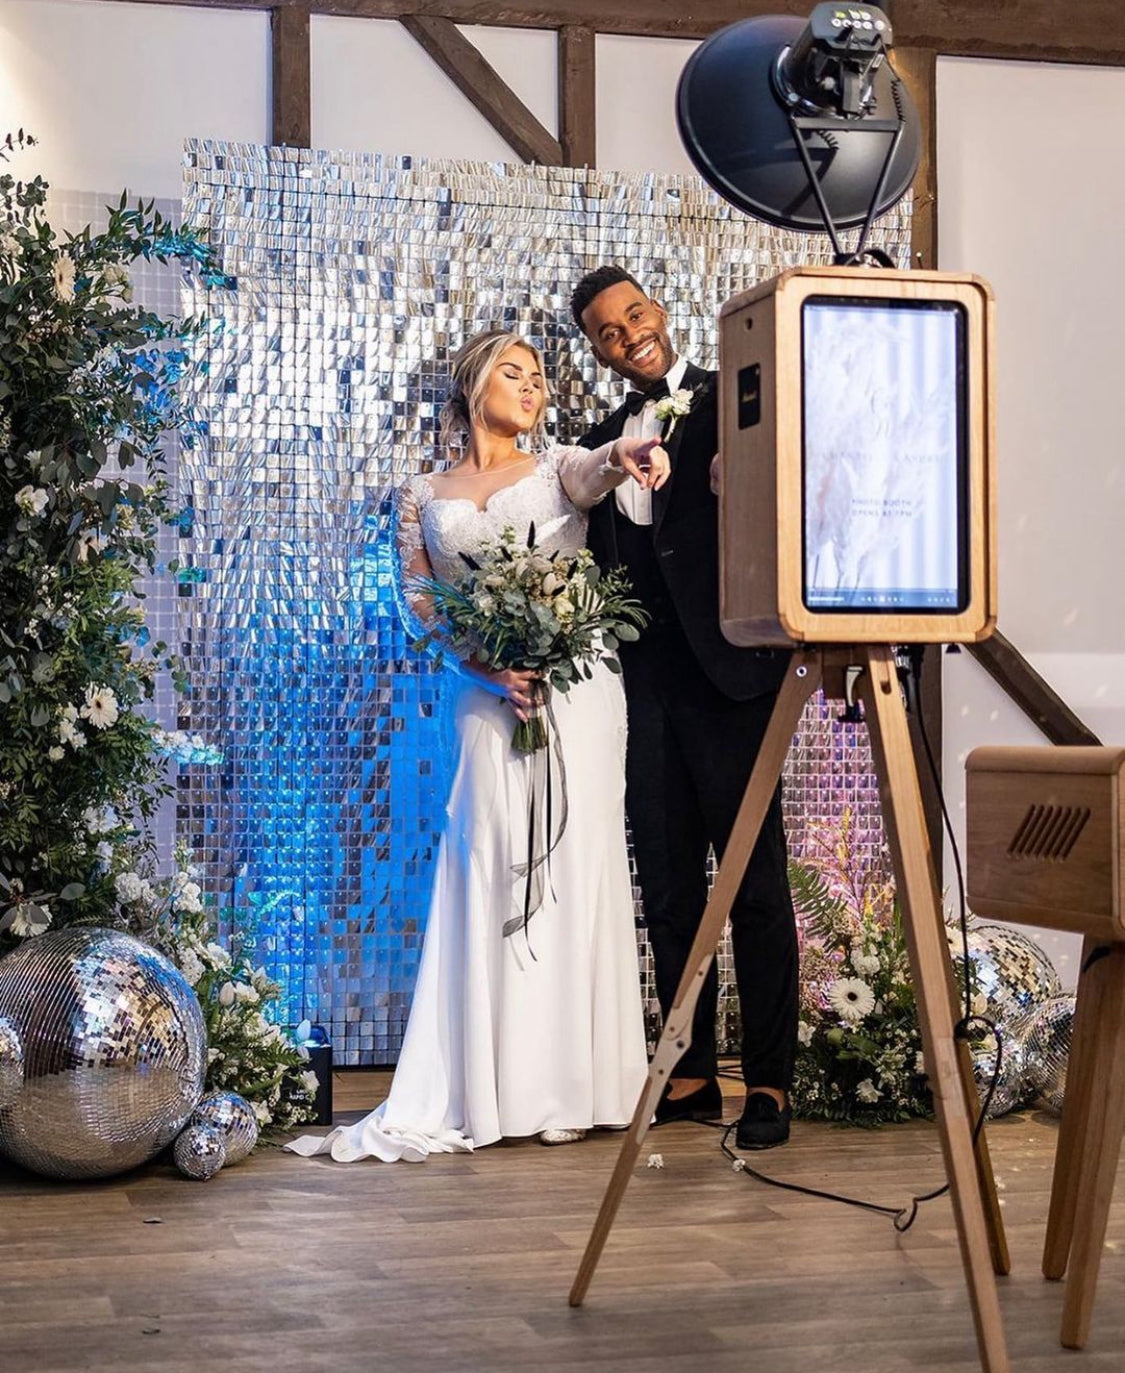 Wedding Digital Photo Booth Experience